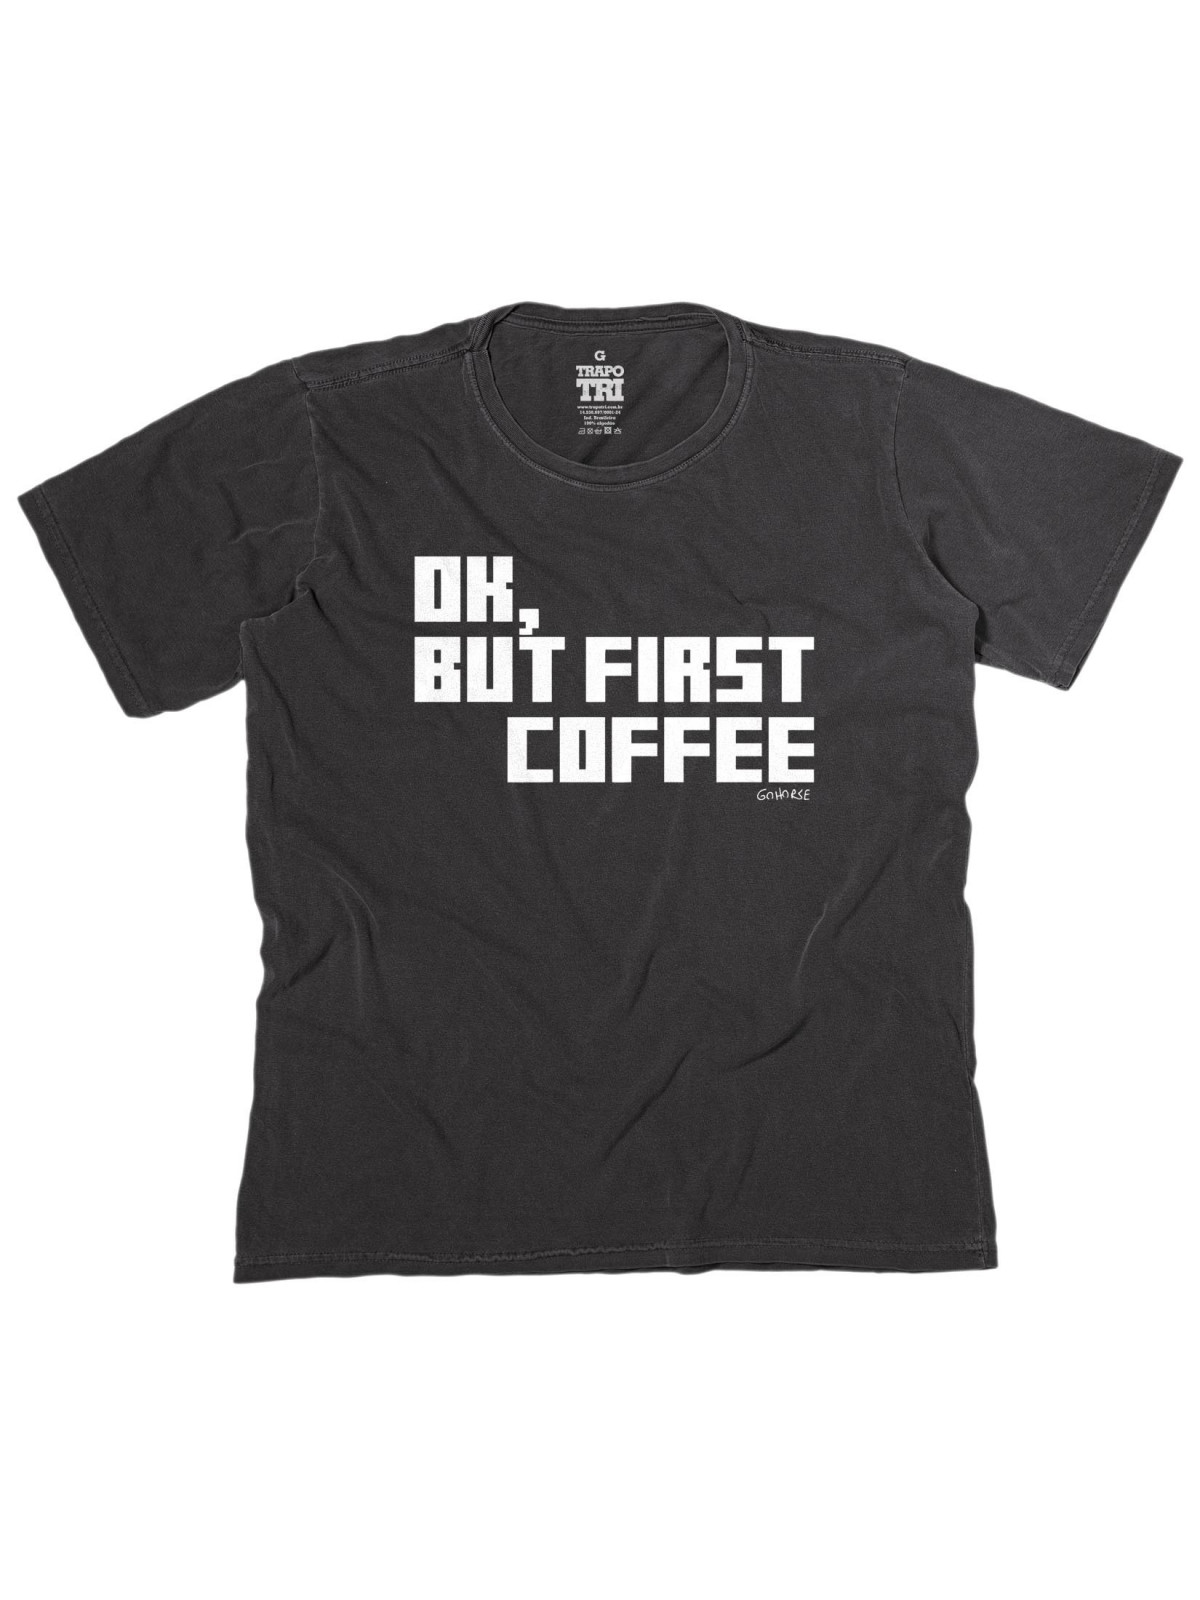 Camiseta First Coffee - Cinza Escuro Estonado